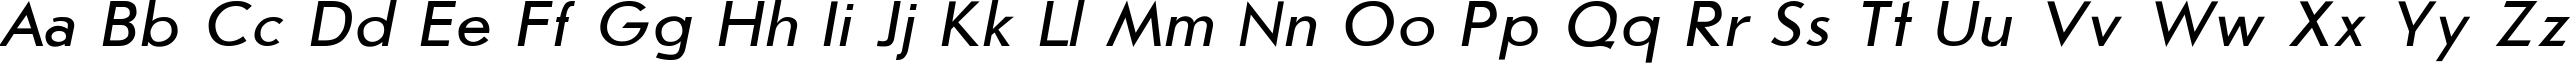 Пример написания английского алфавита шрифтом JournalSans Italic